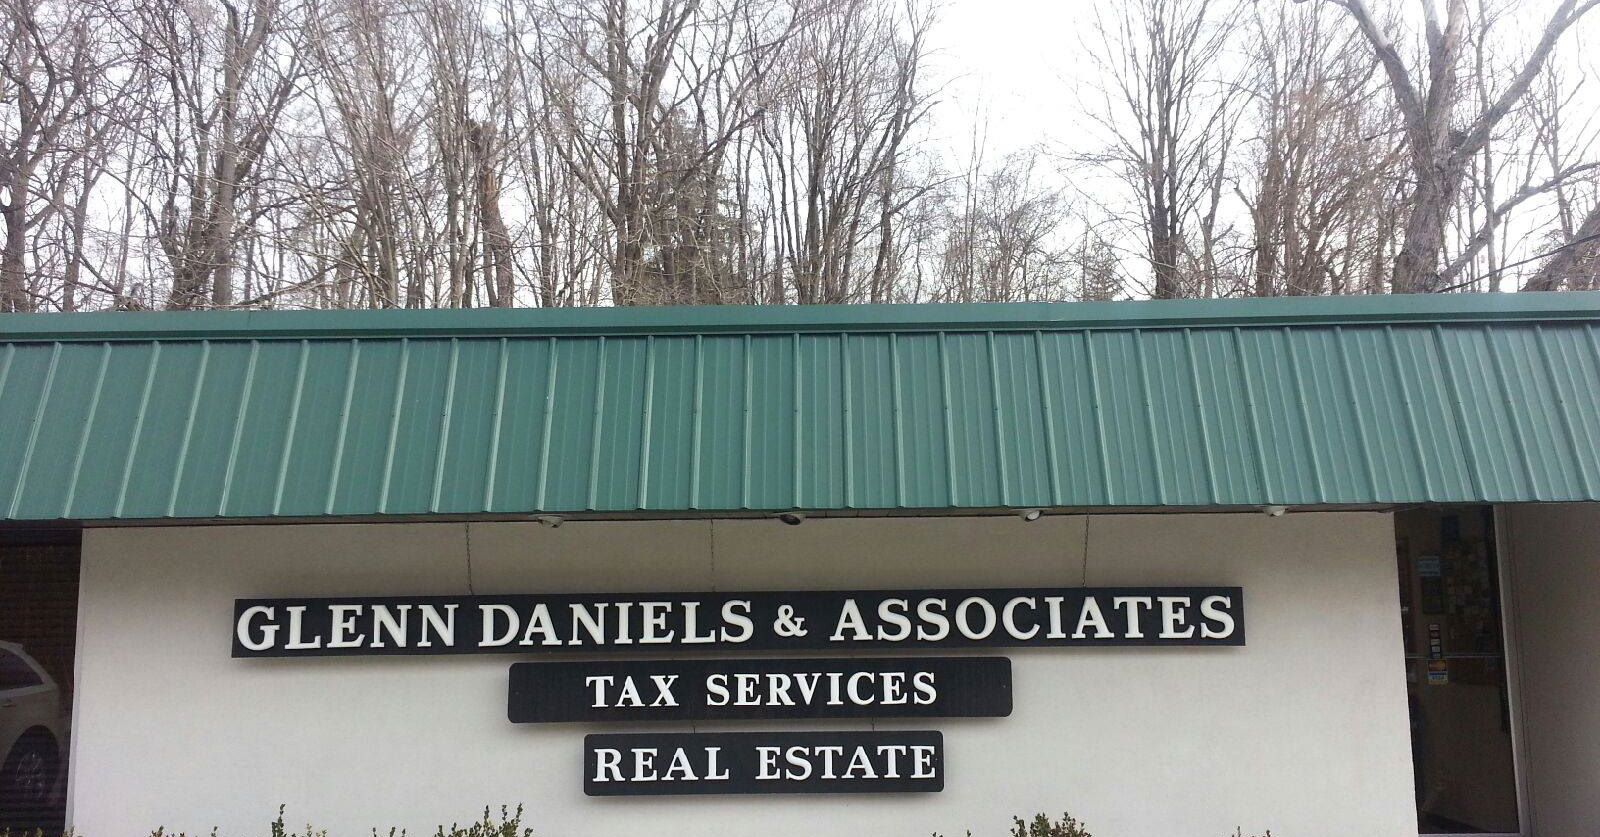 Daniels & Associates Tax Services 1815 Buttermore Blvd, Connellsville Pennsylvania 15425